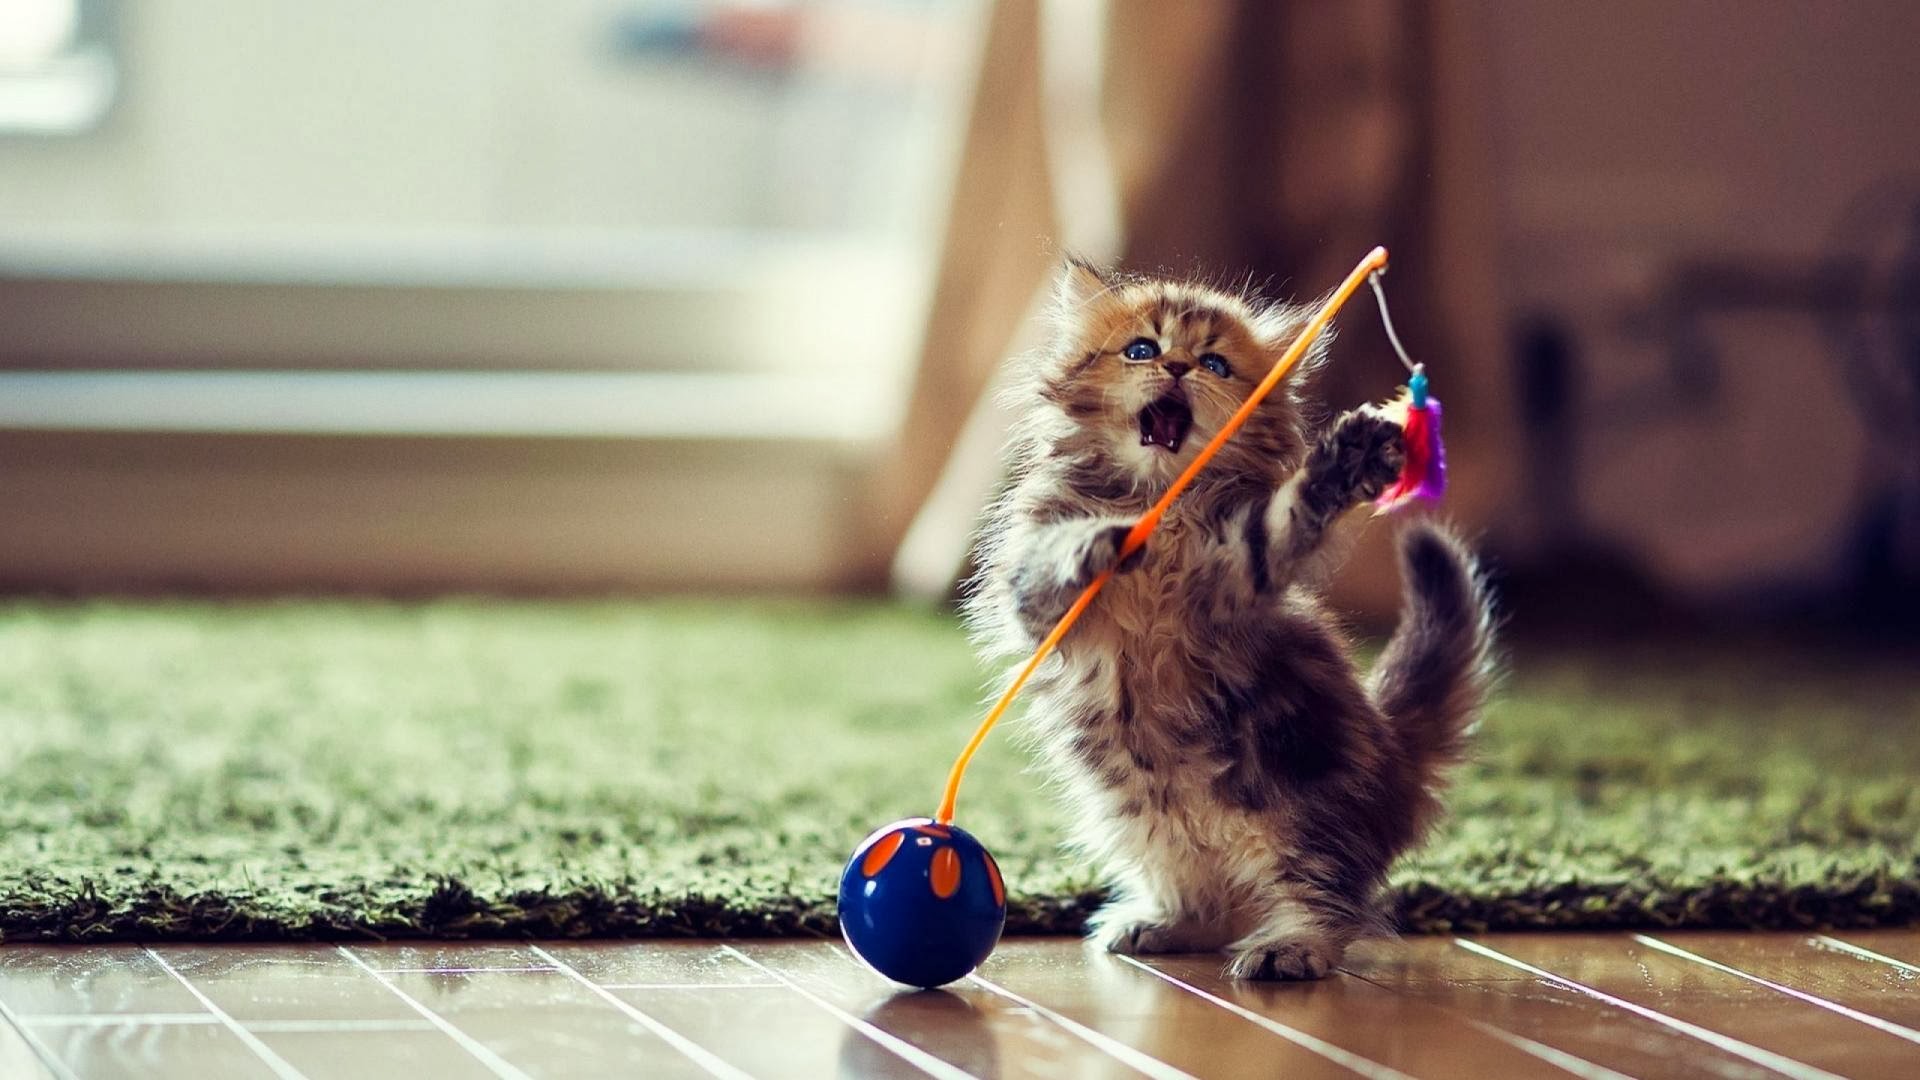 Cute Little Kitten Playing Cat HD Wallpaper Animal Image Photo